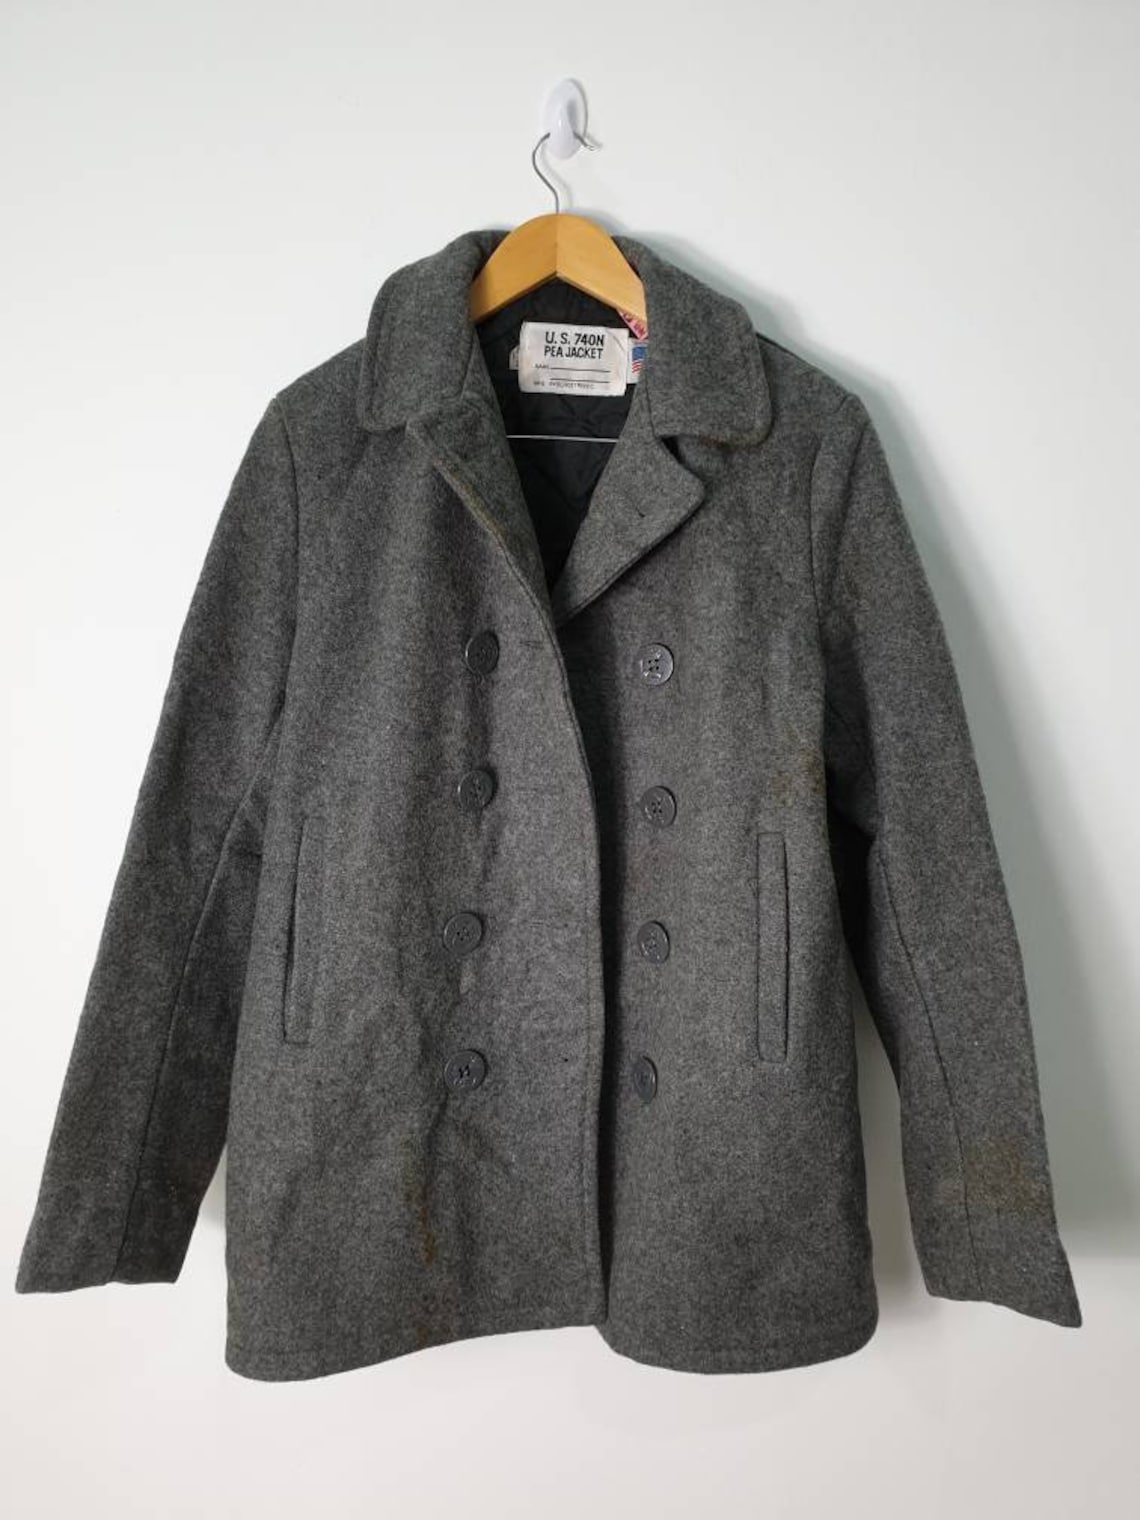 Vintage Schott US 740 N Overcoat Parka Wool Pea Jacket Schott | Etsy